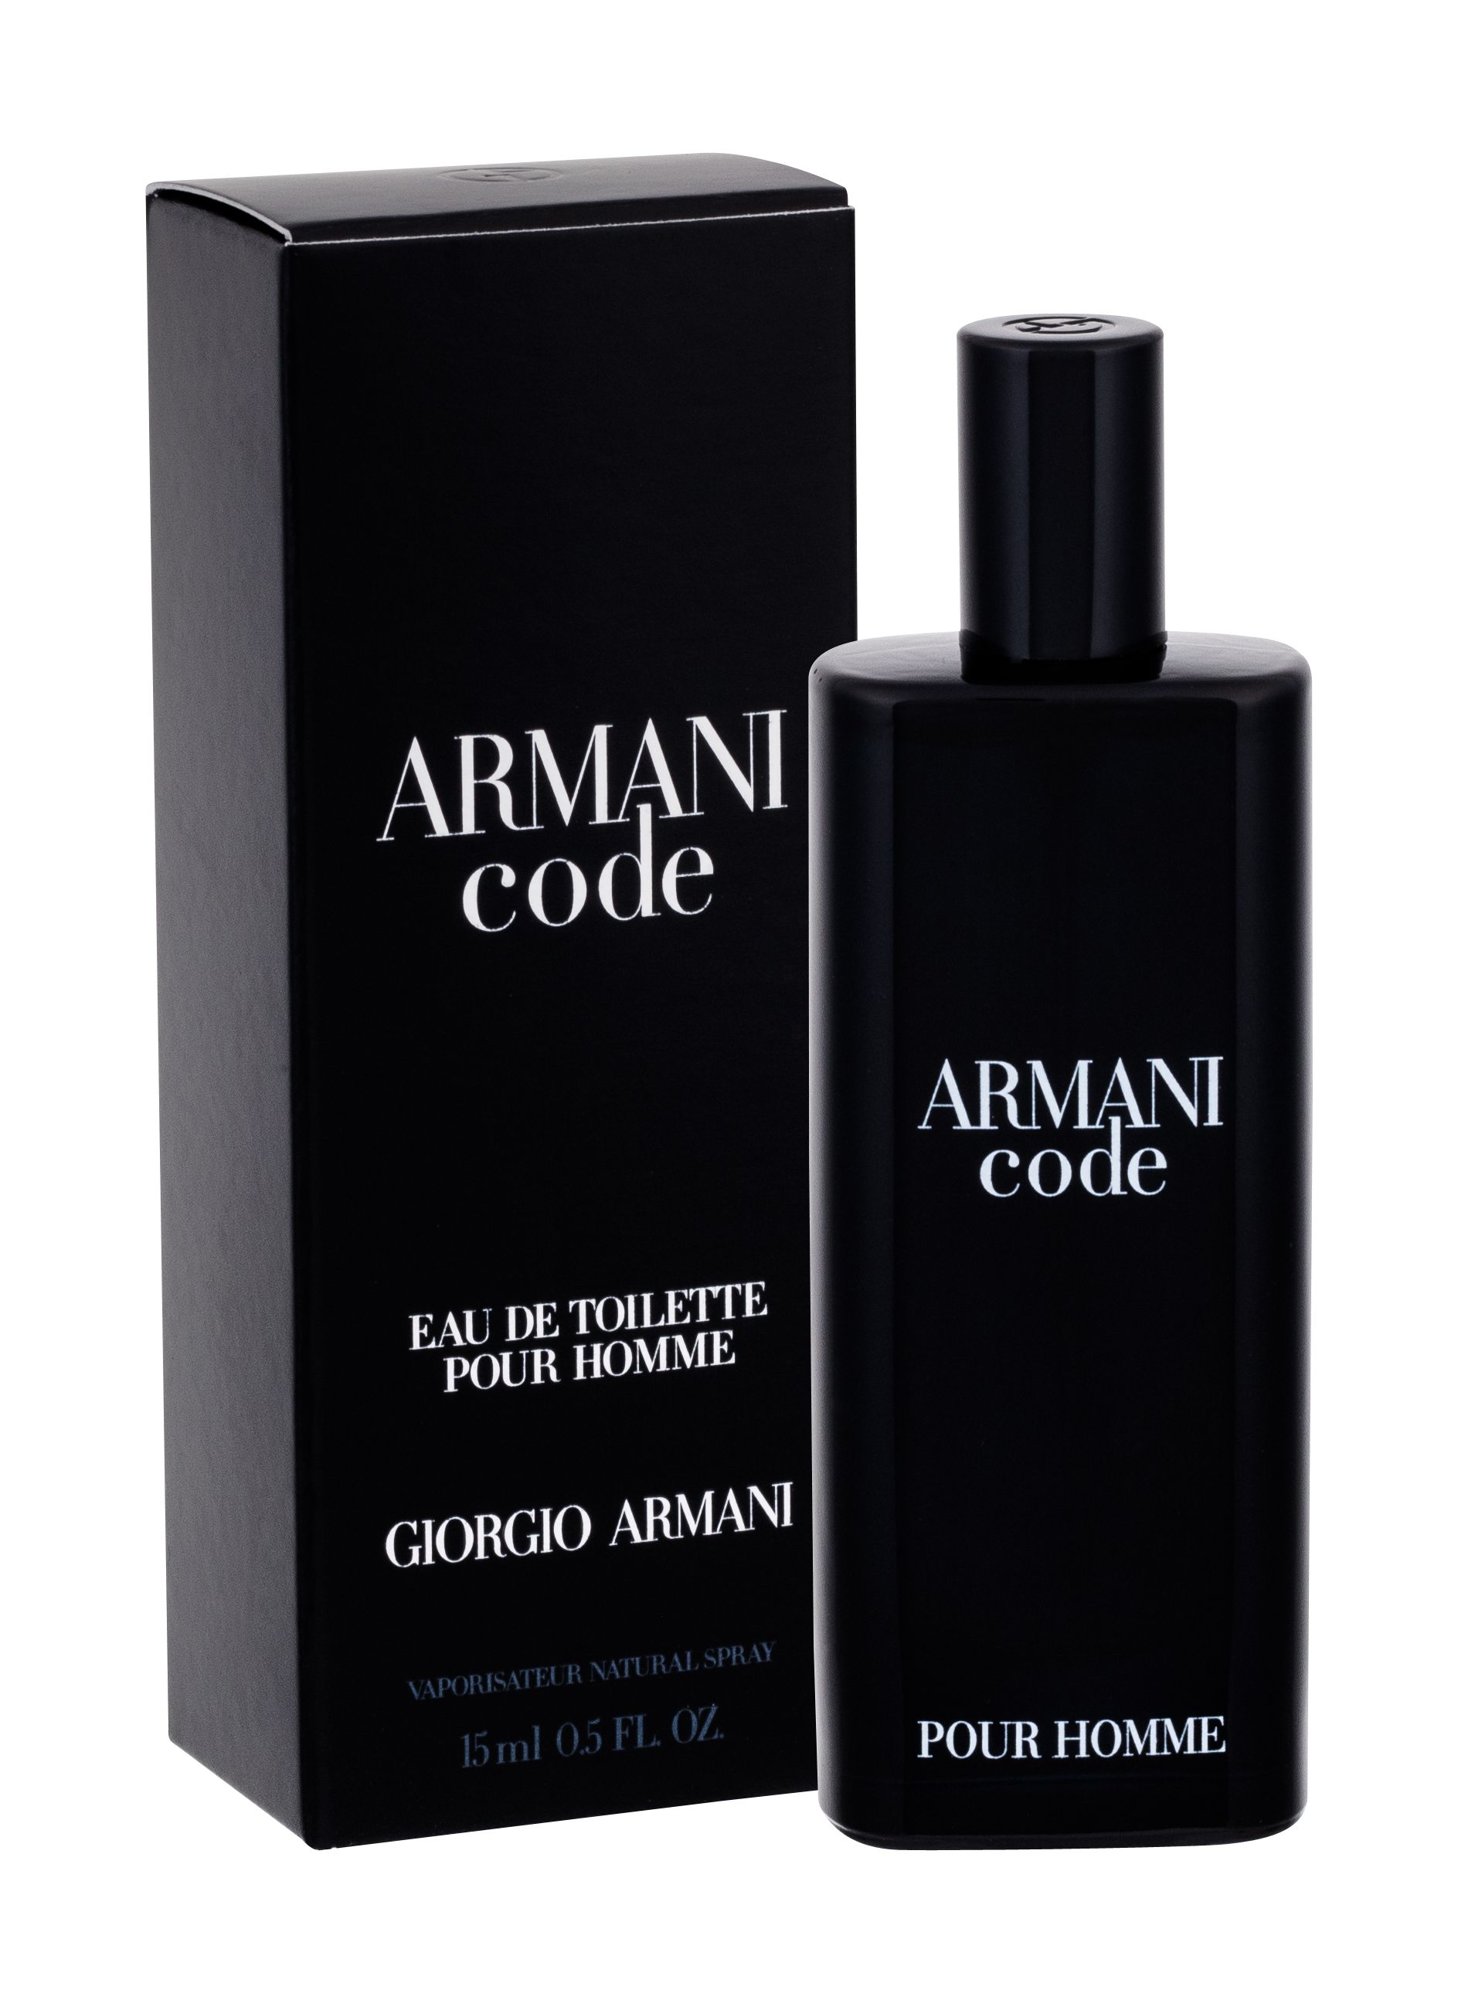 Giorgio armani pour homme. Armani code EDT. Giorgio Armani туалетная вода Armani code homme. Giorgio Armani code Eau Toilette pour homme. Armani Armani code pour homme.